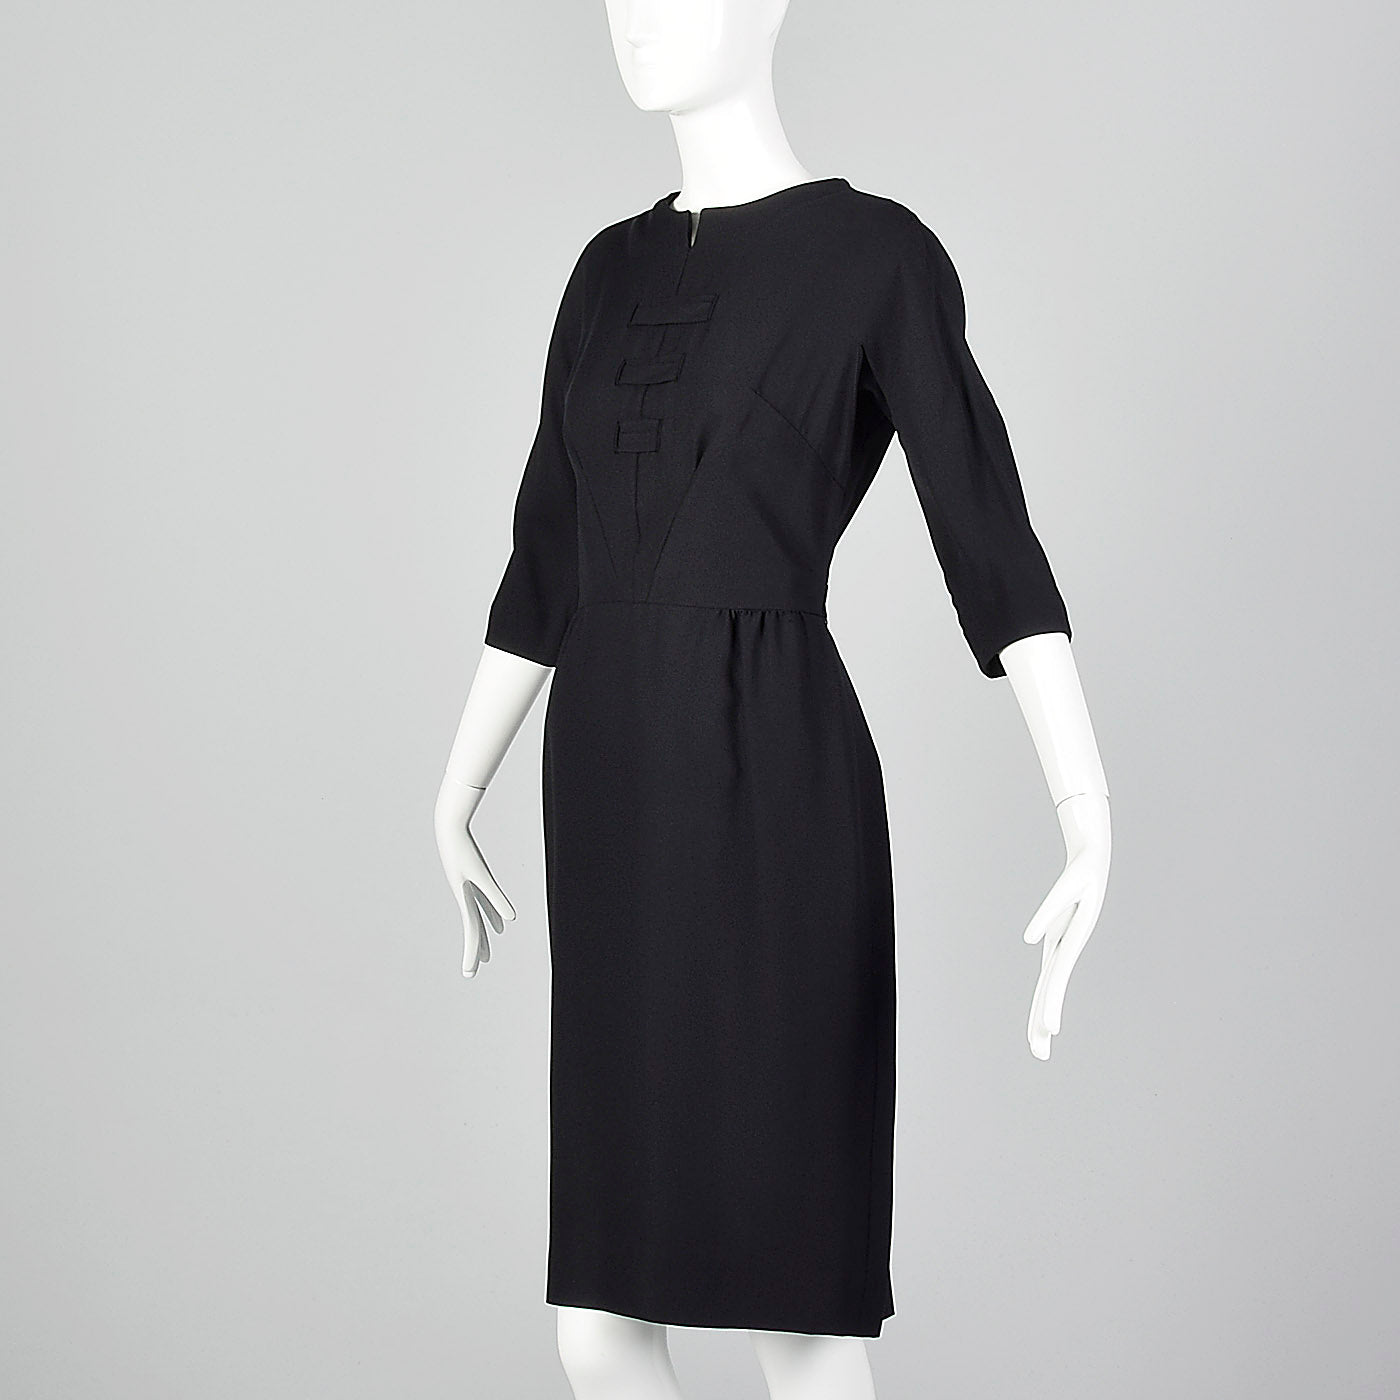 1950s Black Dress